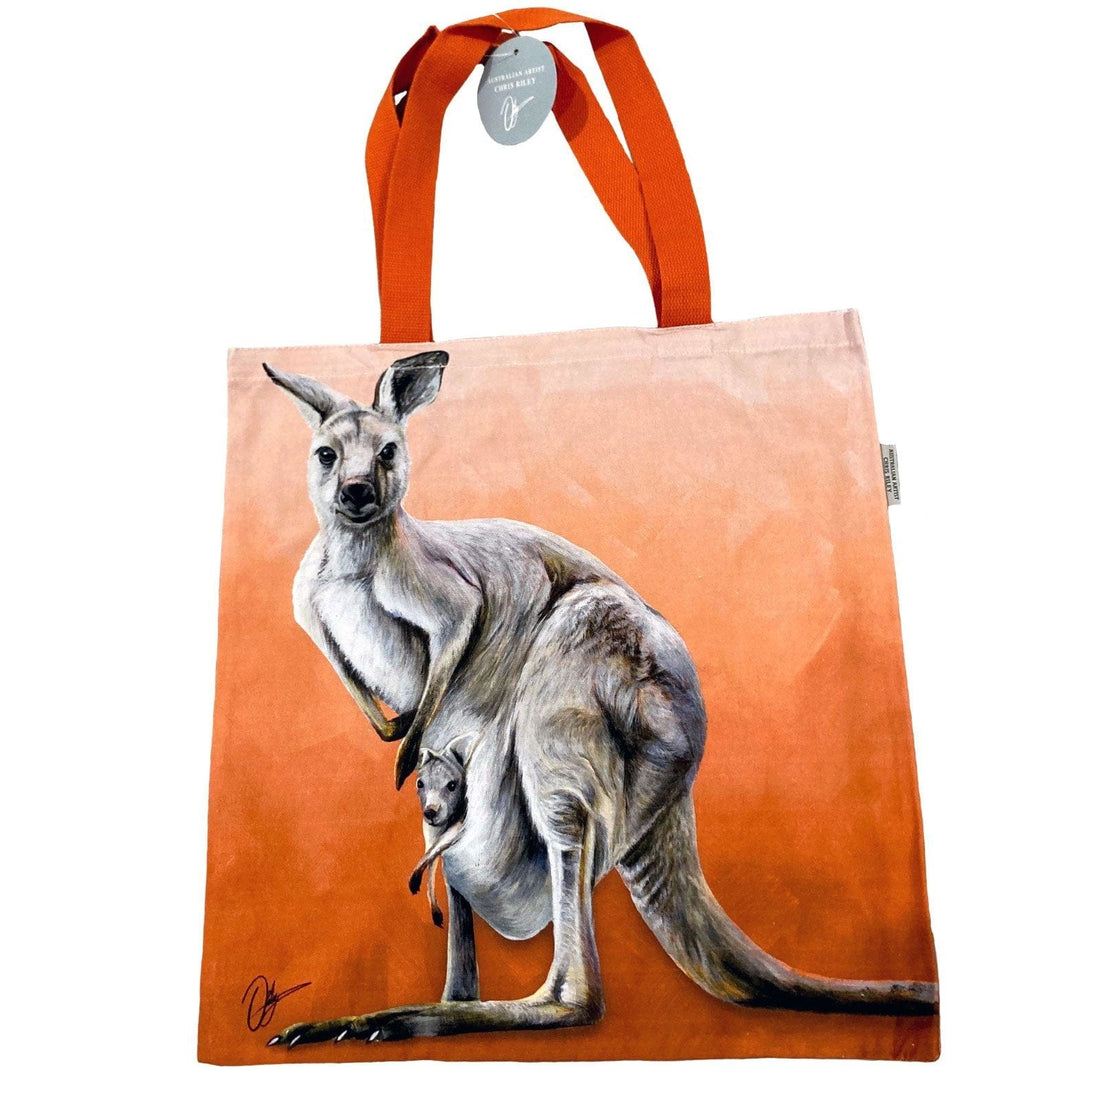 Kangaroo Tote Bag - Chris Riley Design.